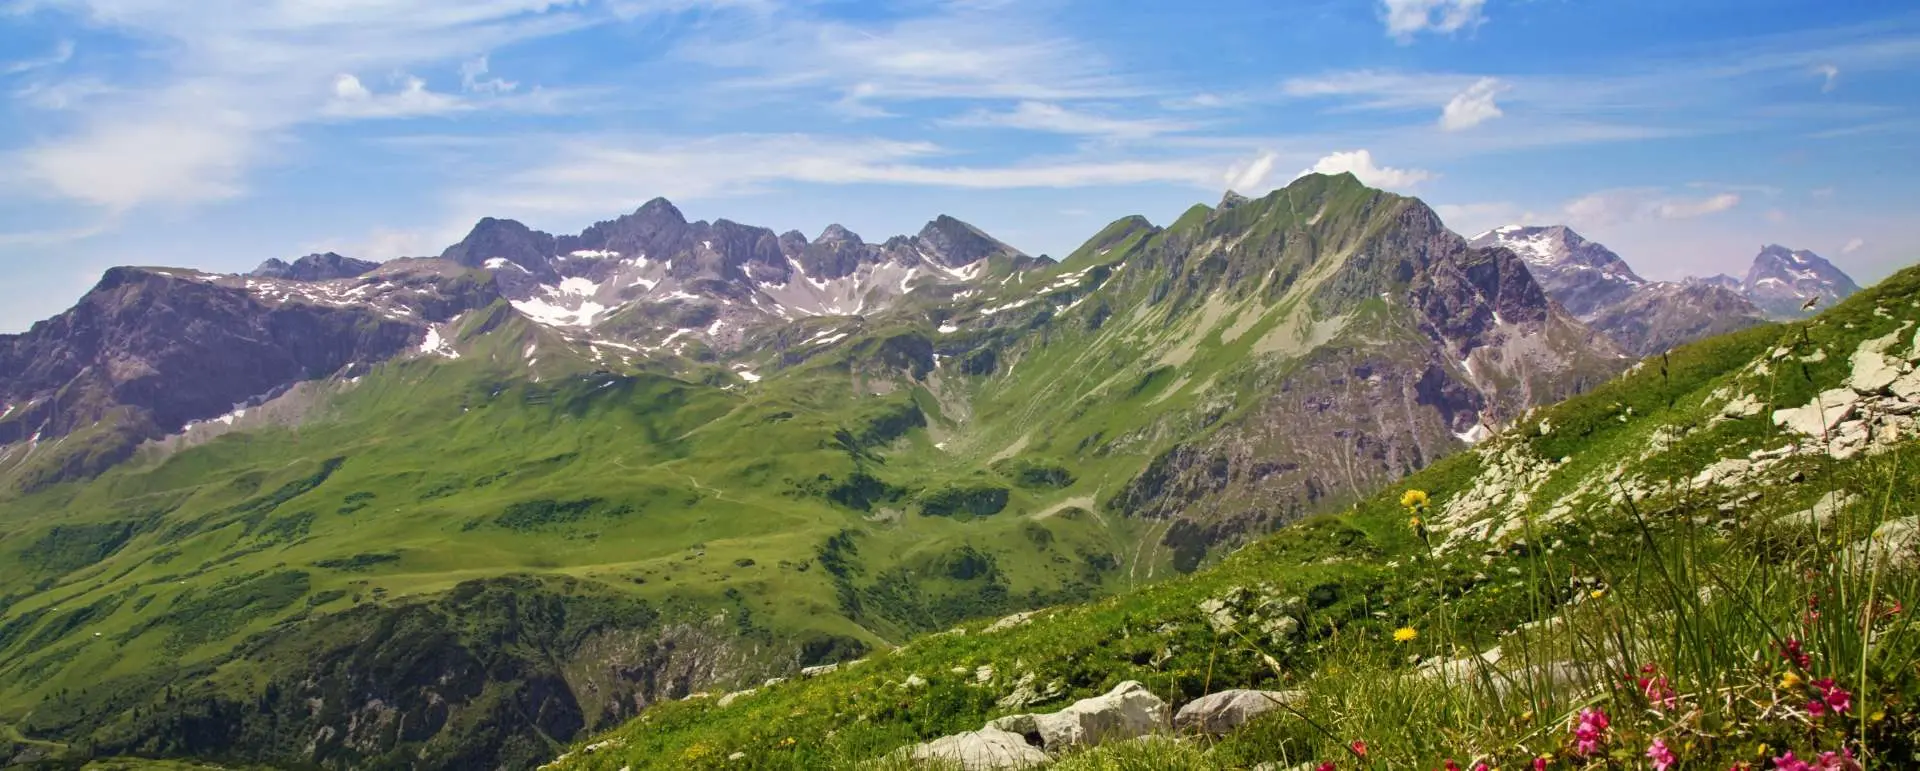 Arlberg - the destination for classes seeking nature experiences